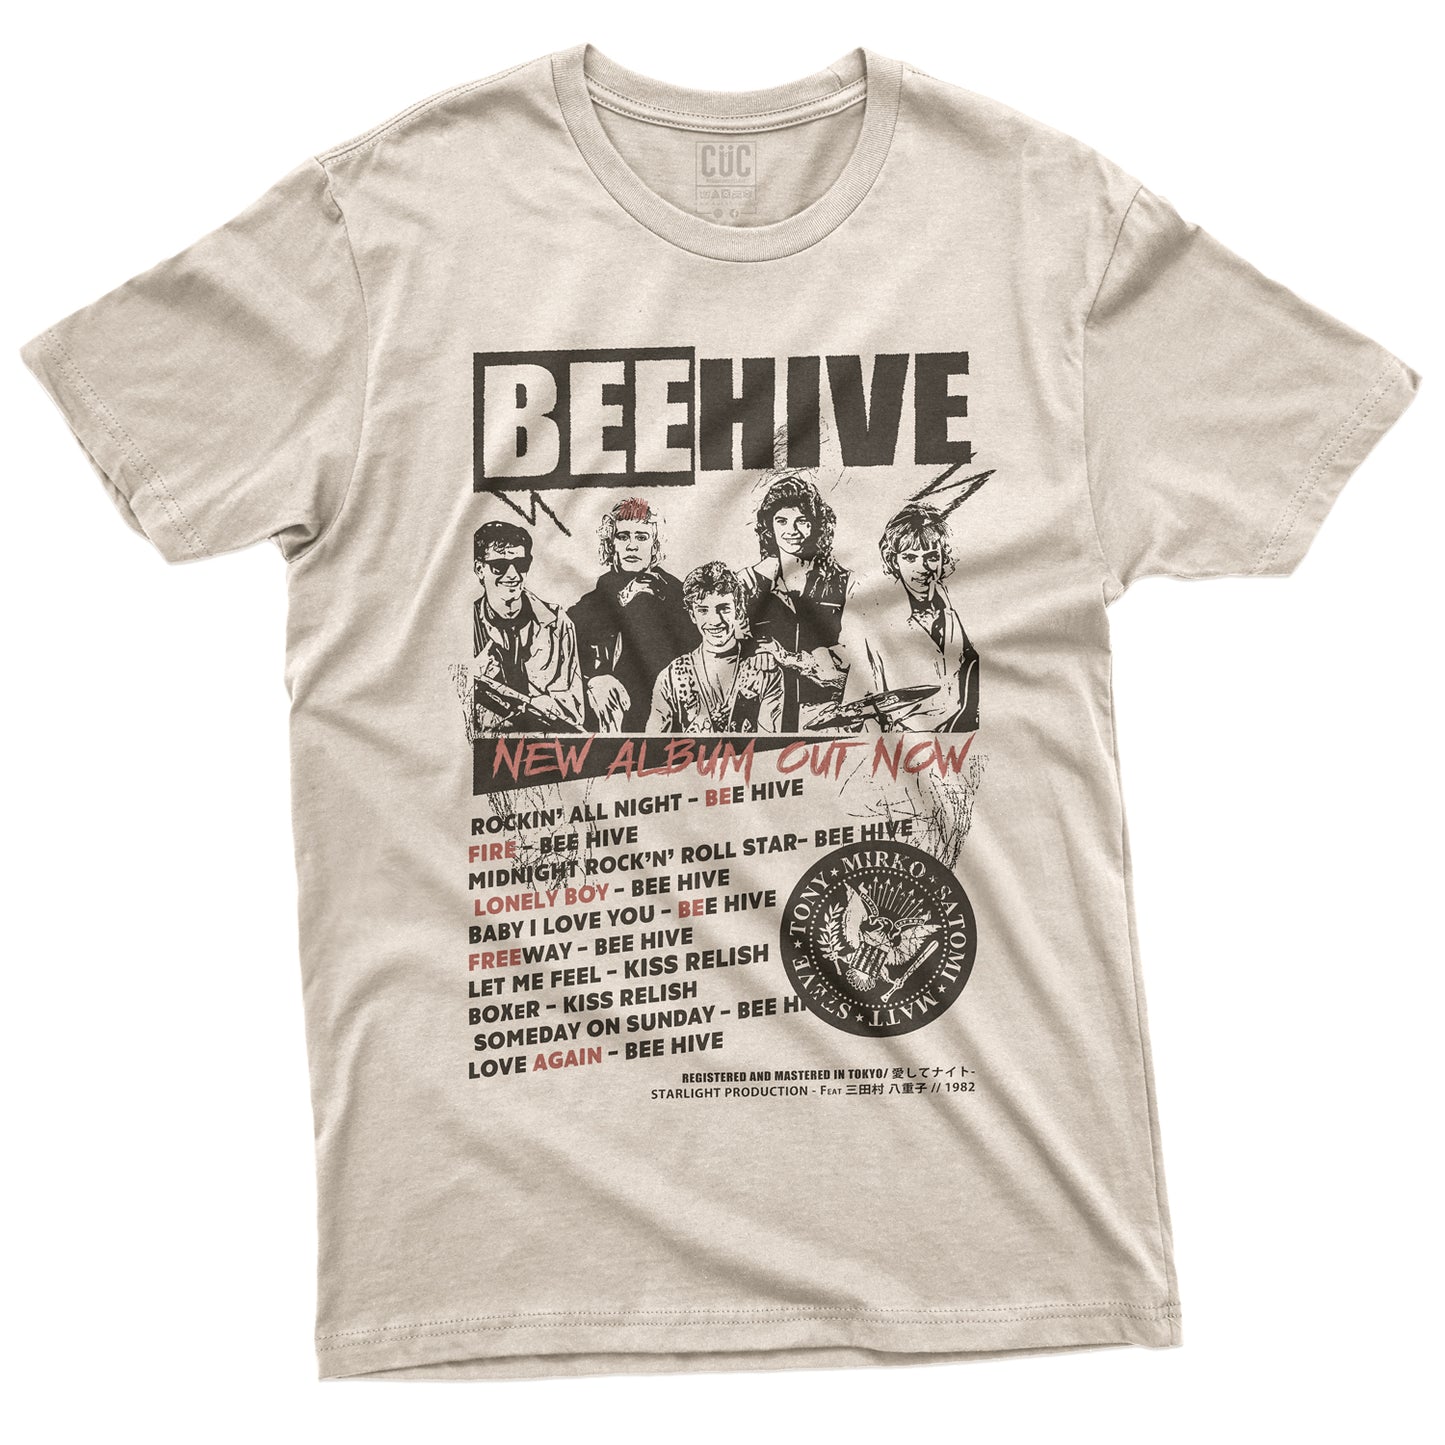 CUC T-Shirt BEEHIVE - Kiss me Licia - Rock Band  #chooseurcolor